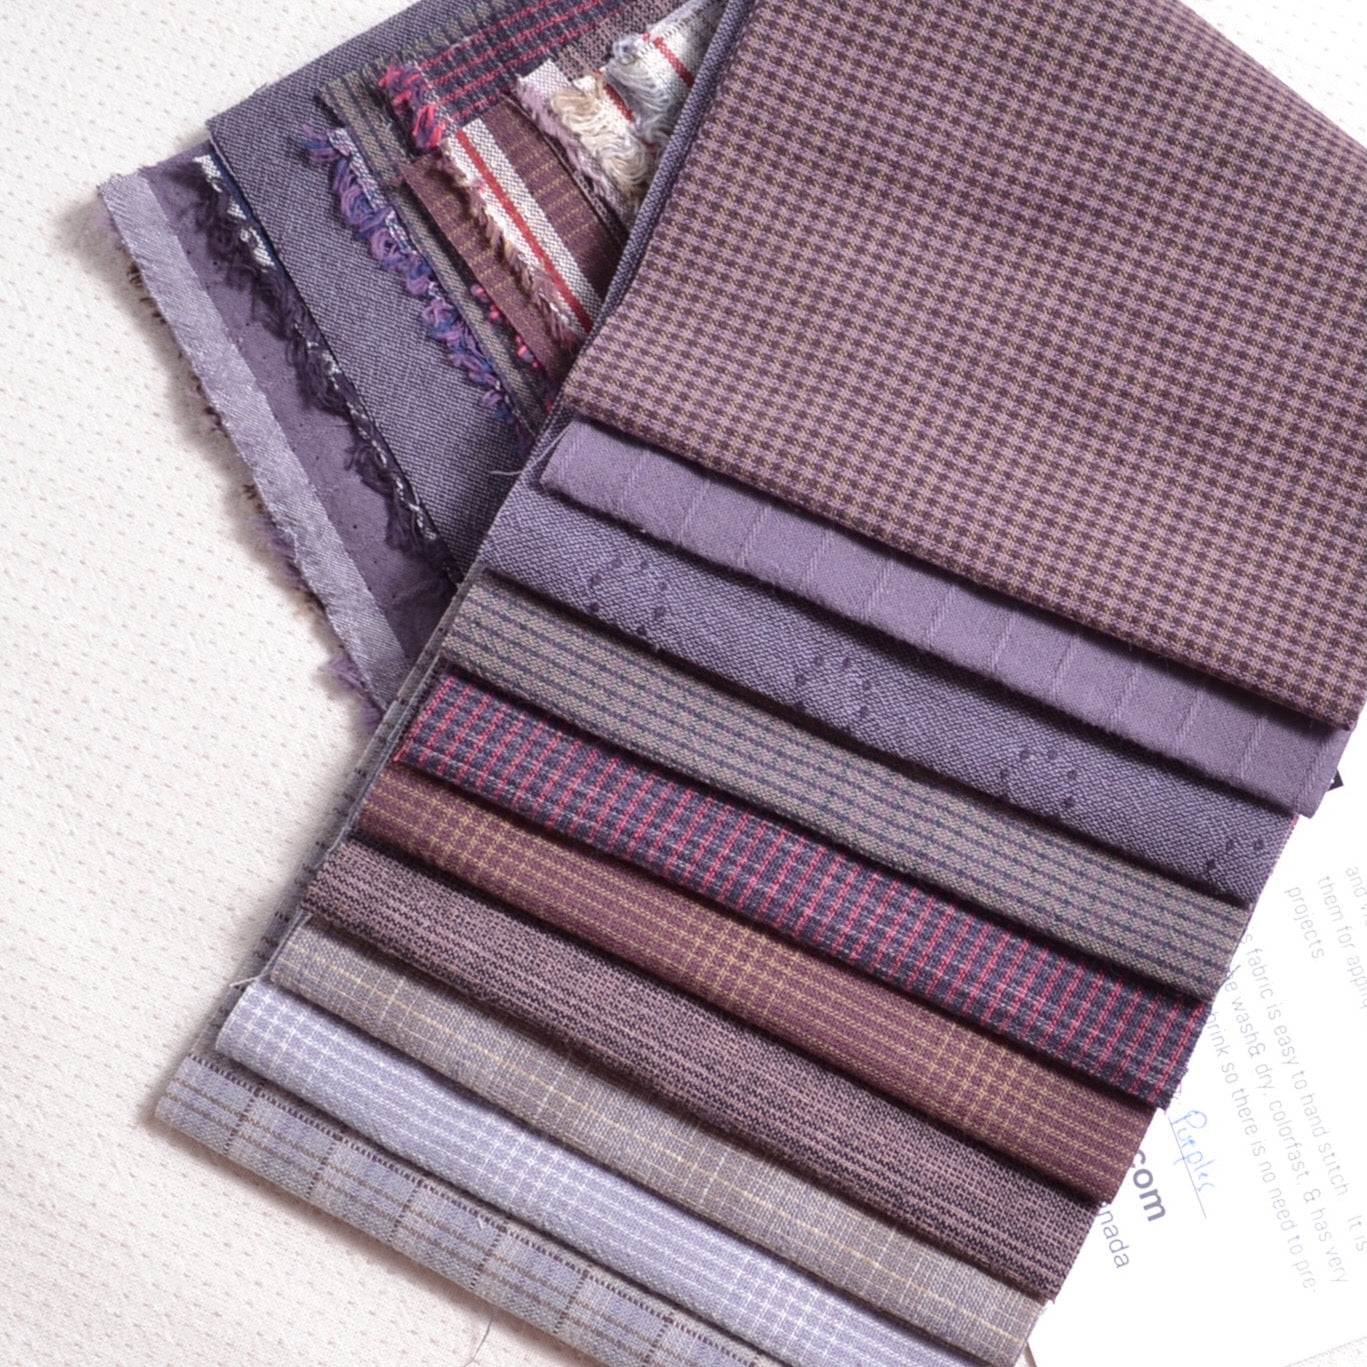 yarn dyed purple small cuts of cotton fabric